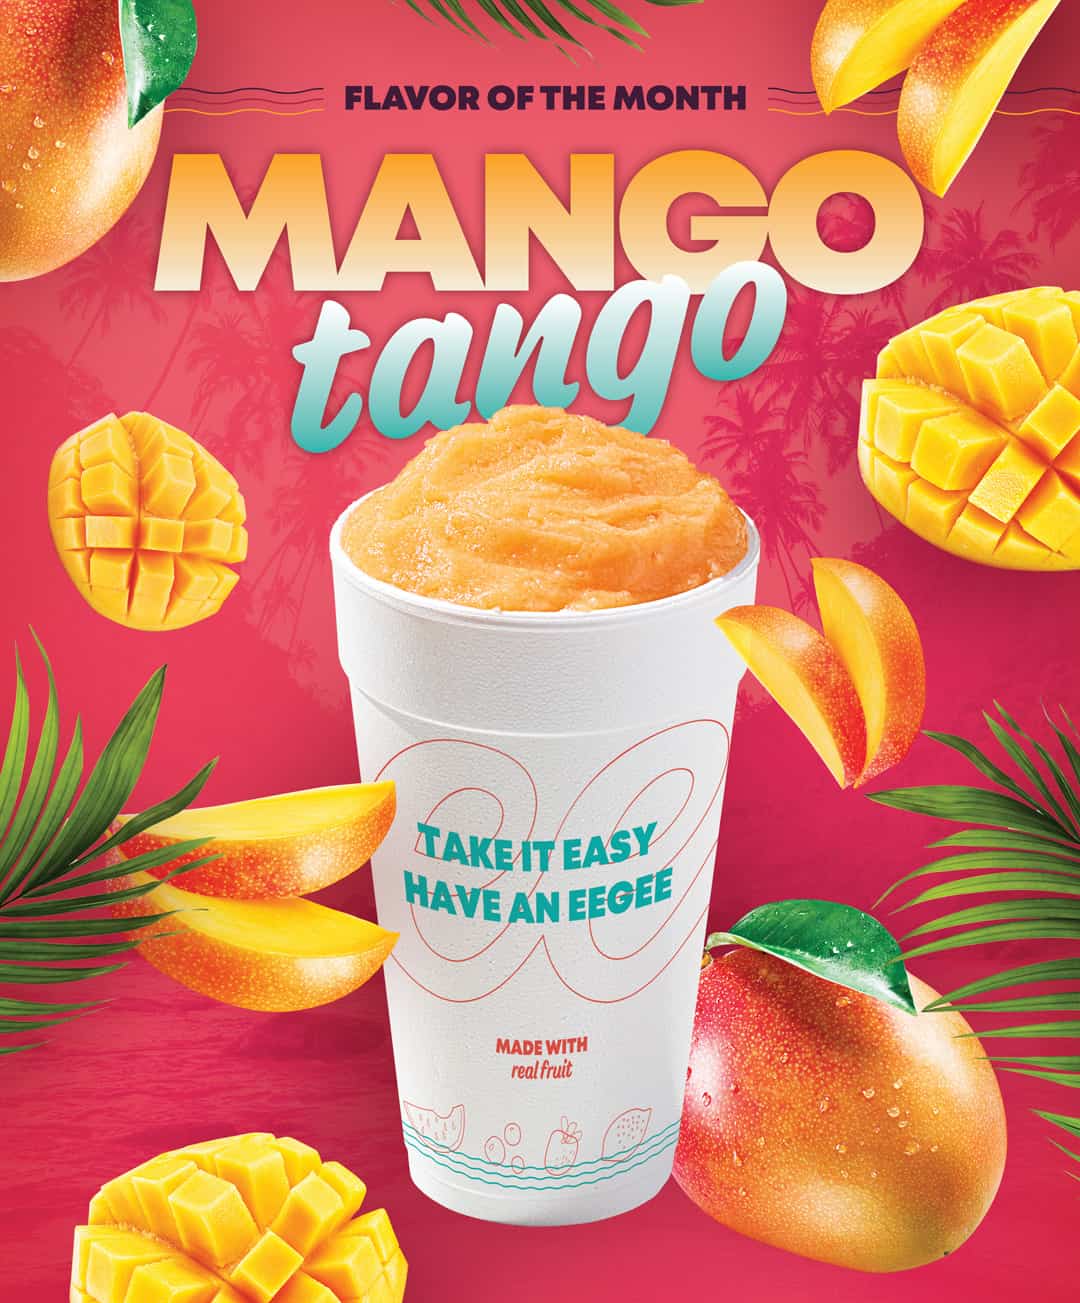 Monthly Restaurant Marketing & Advertising - Mango Tango eegee